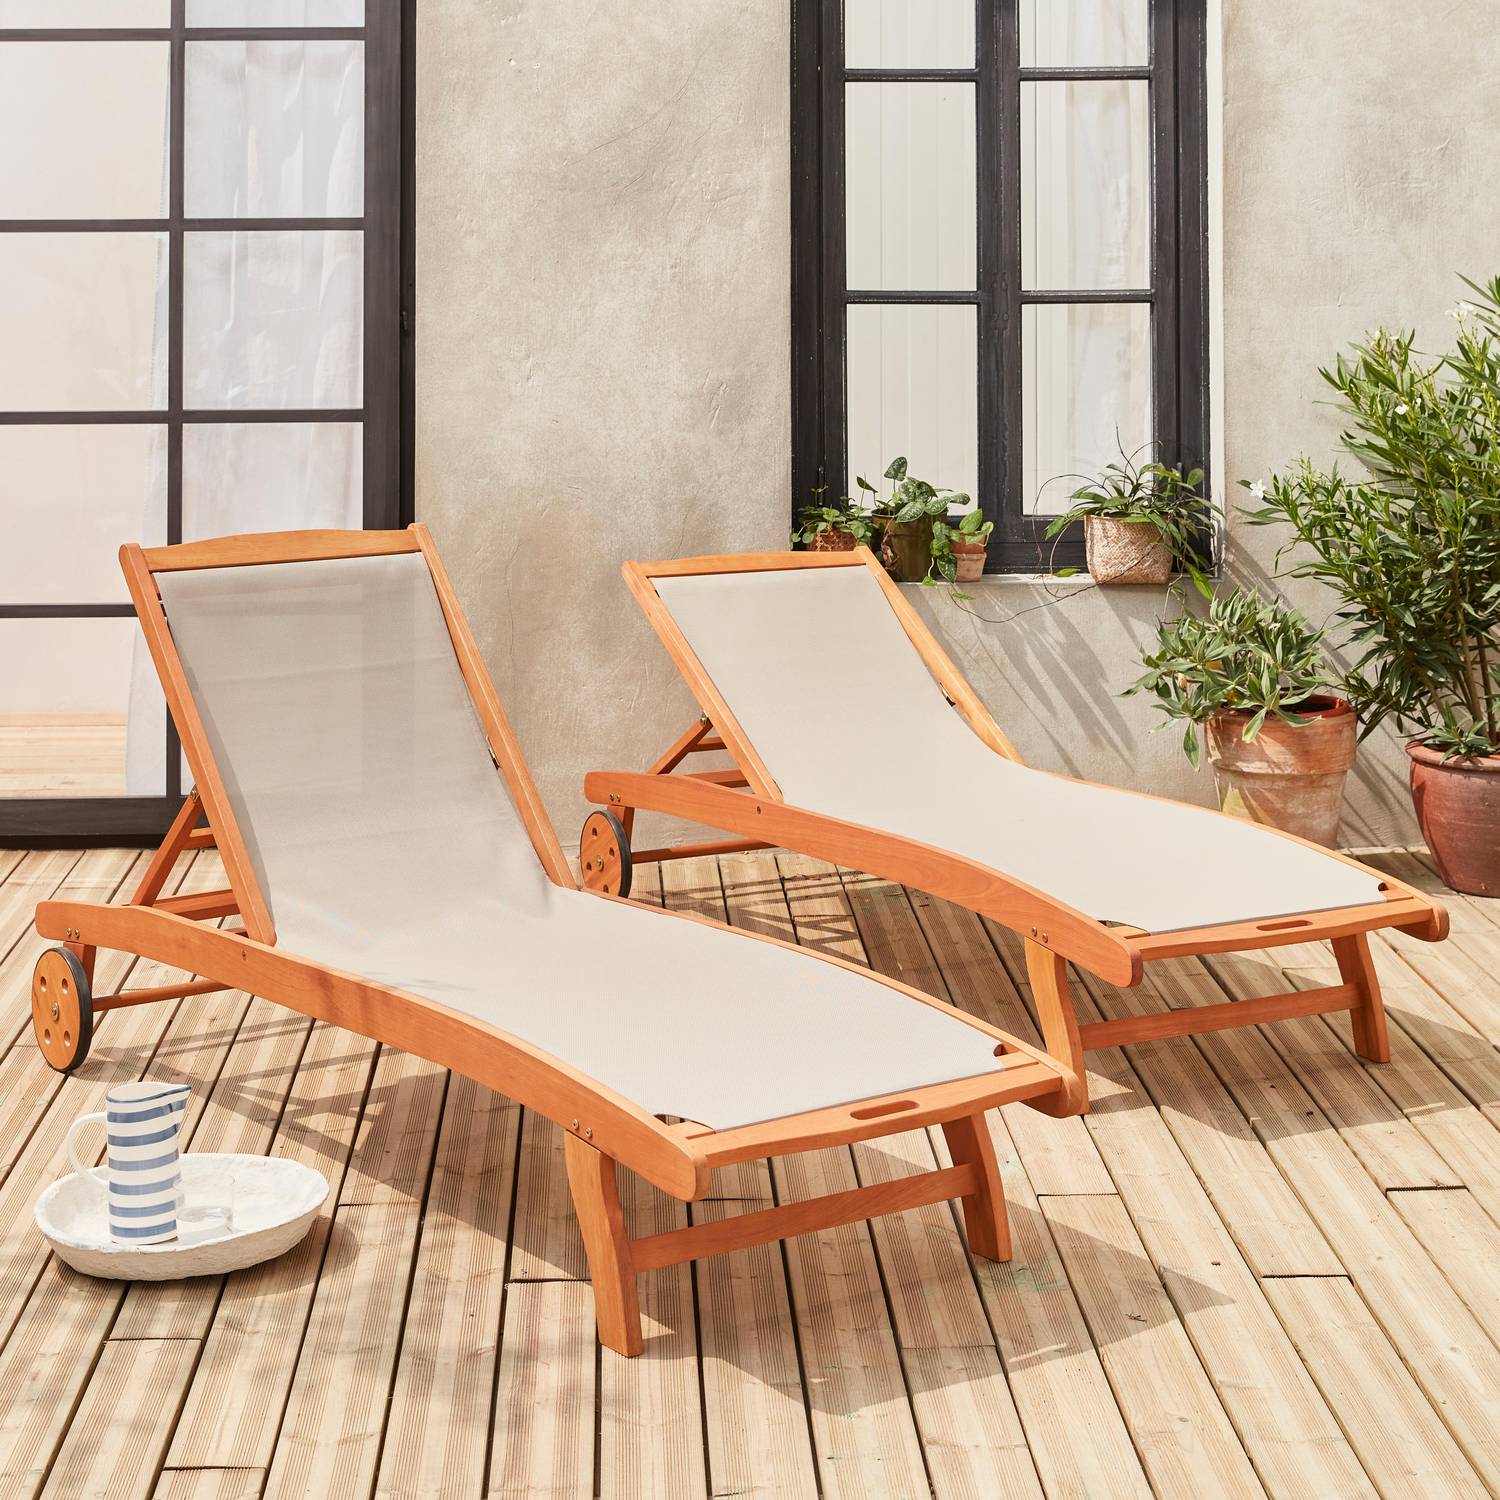 2er Set Holz Sonnenliegen - Marbella Taupegrau - 2 Liegestühle aus geöltem FSC-Eukalyptusholz und Textilene in Taupegrau Photo1